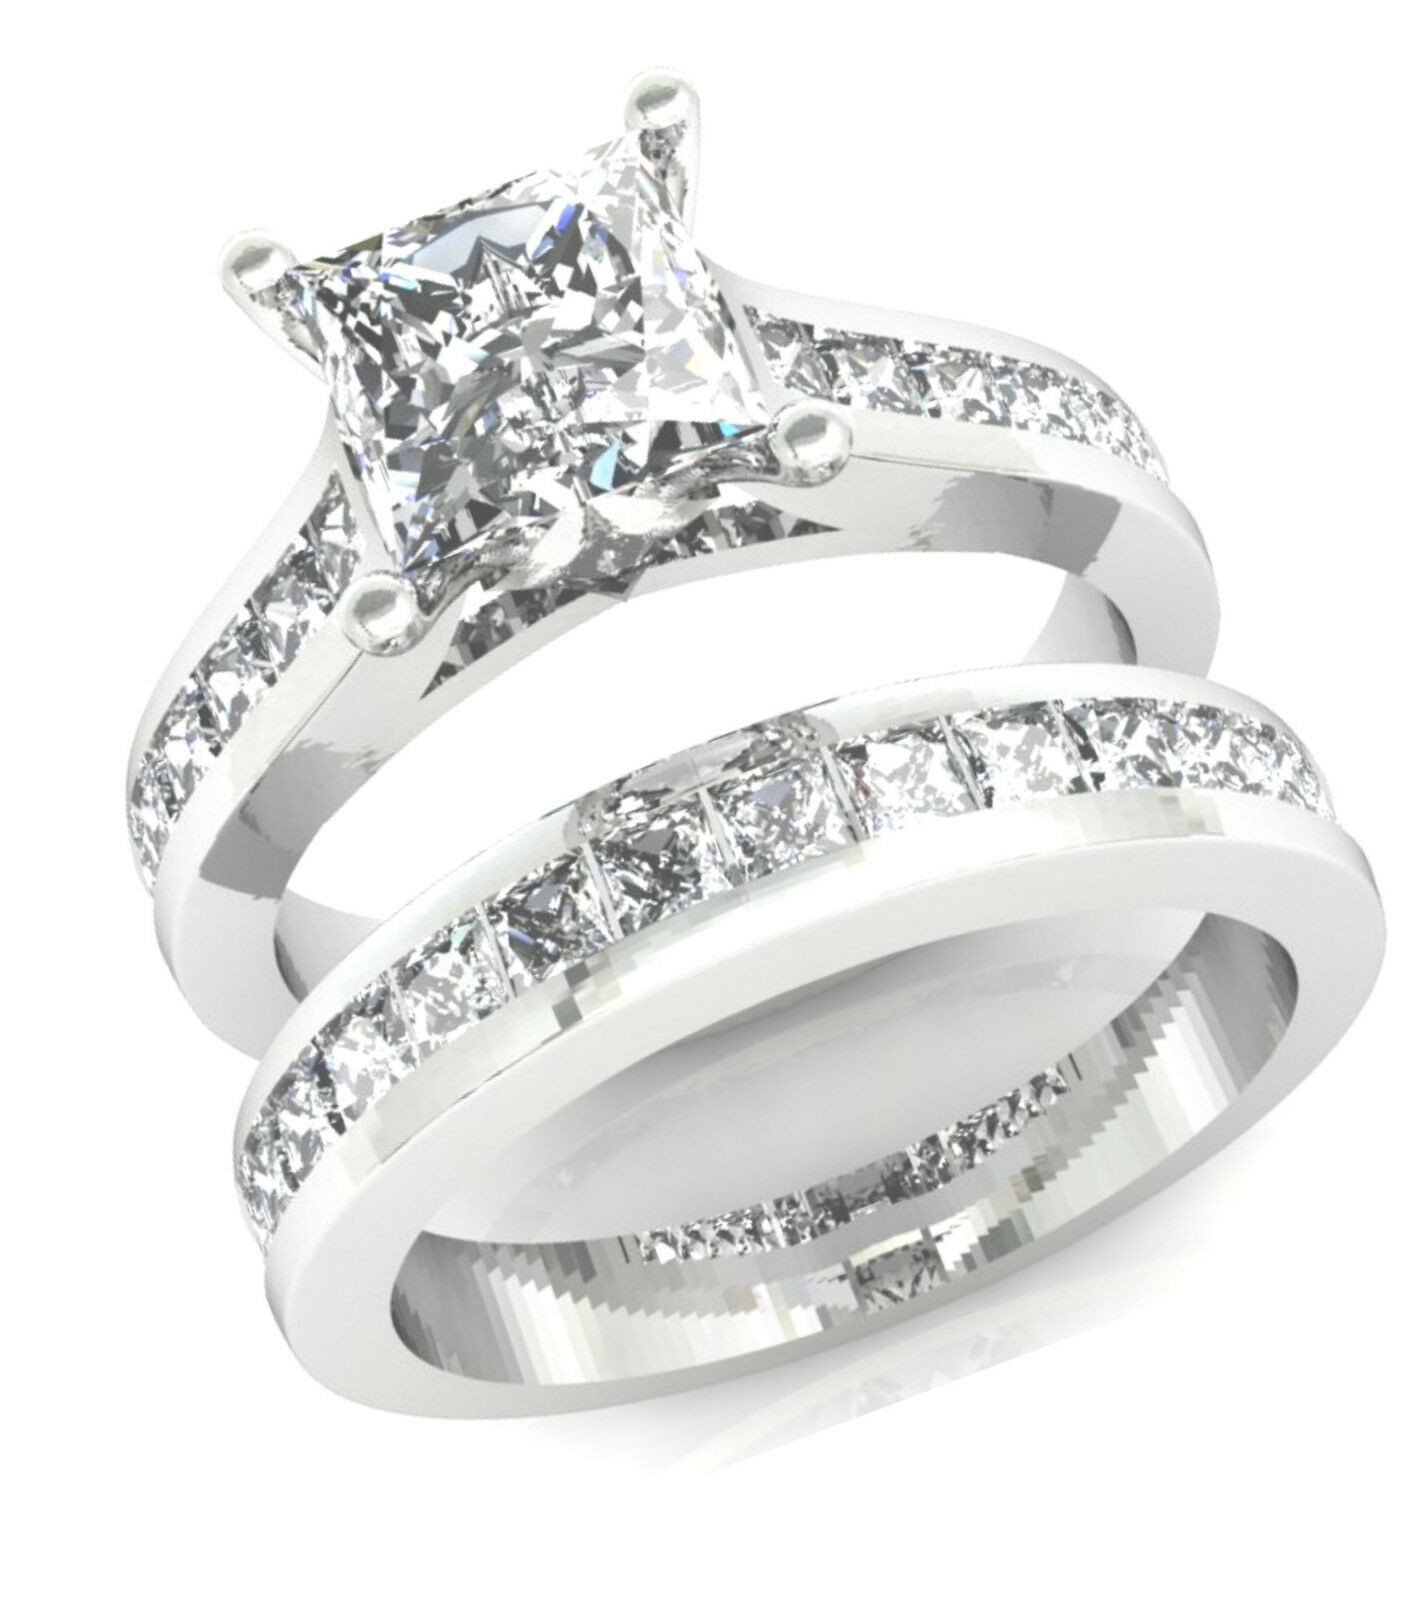 White Gold Princess Cut Wedding Rings
 3 2CT PRINCESS CUT CHANNEL SET ENGAGEMENT RING WEDDING